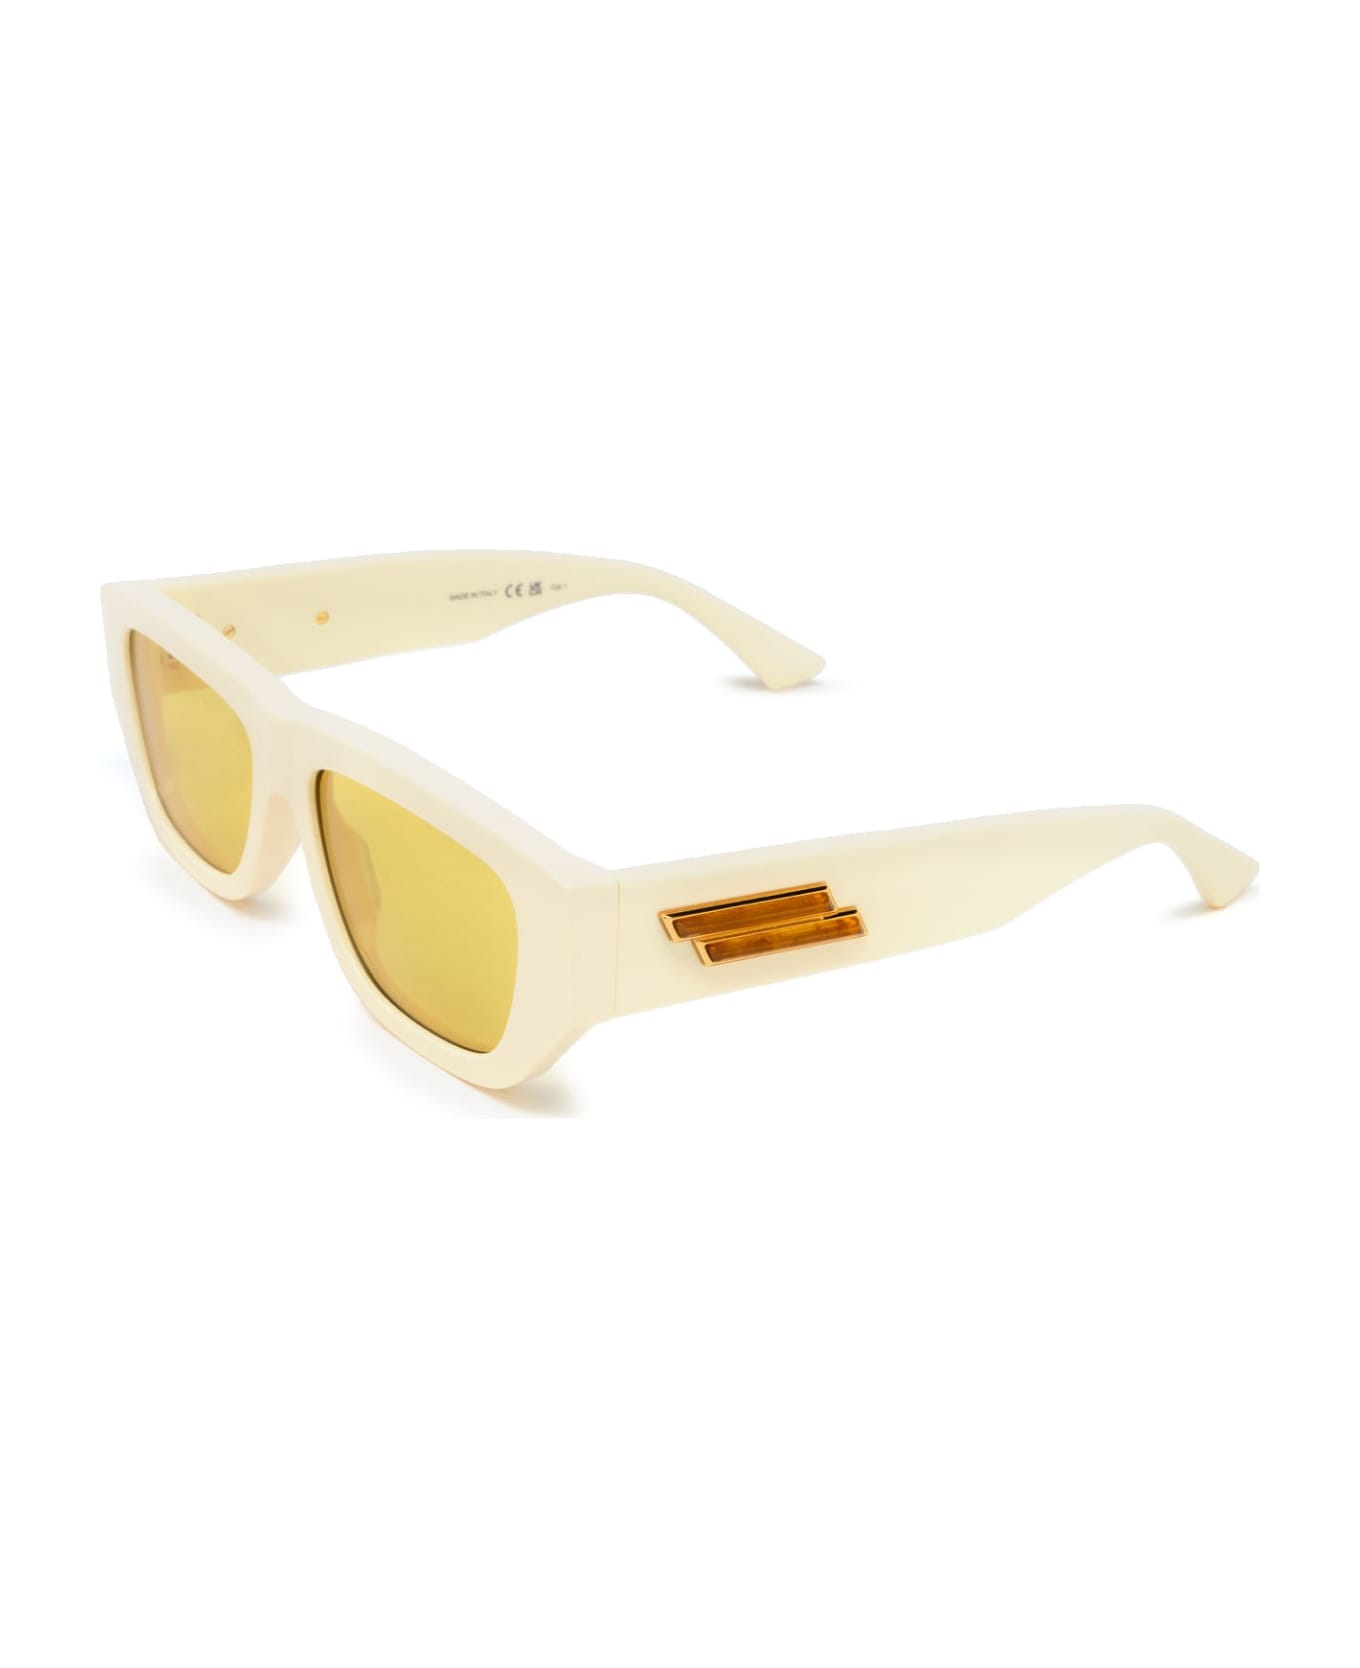 Bottega Veneta Eyewear Bv1252s Ivory Sunglasses - Ivory